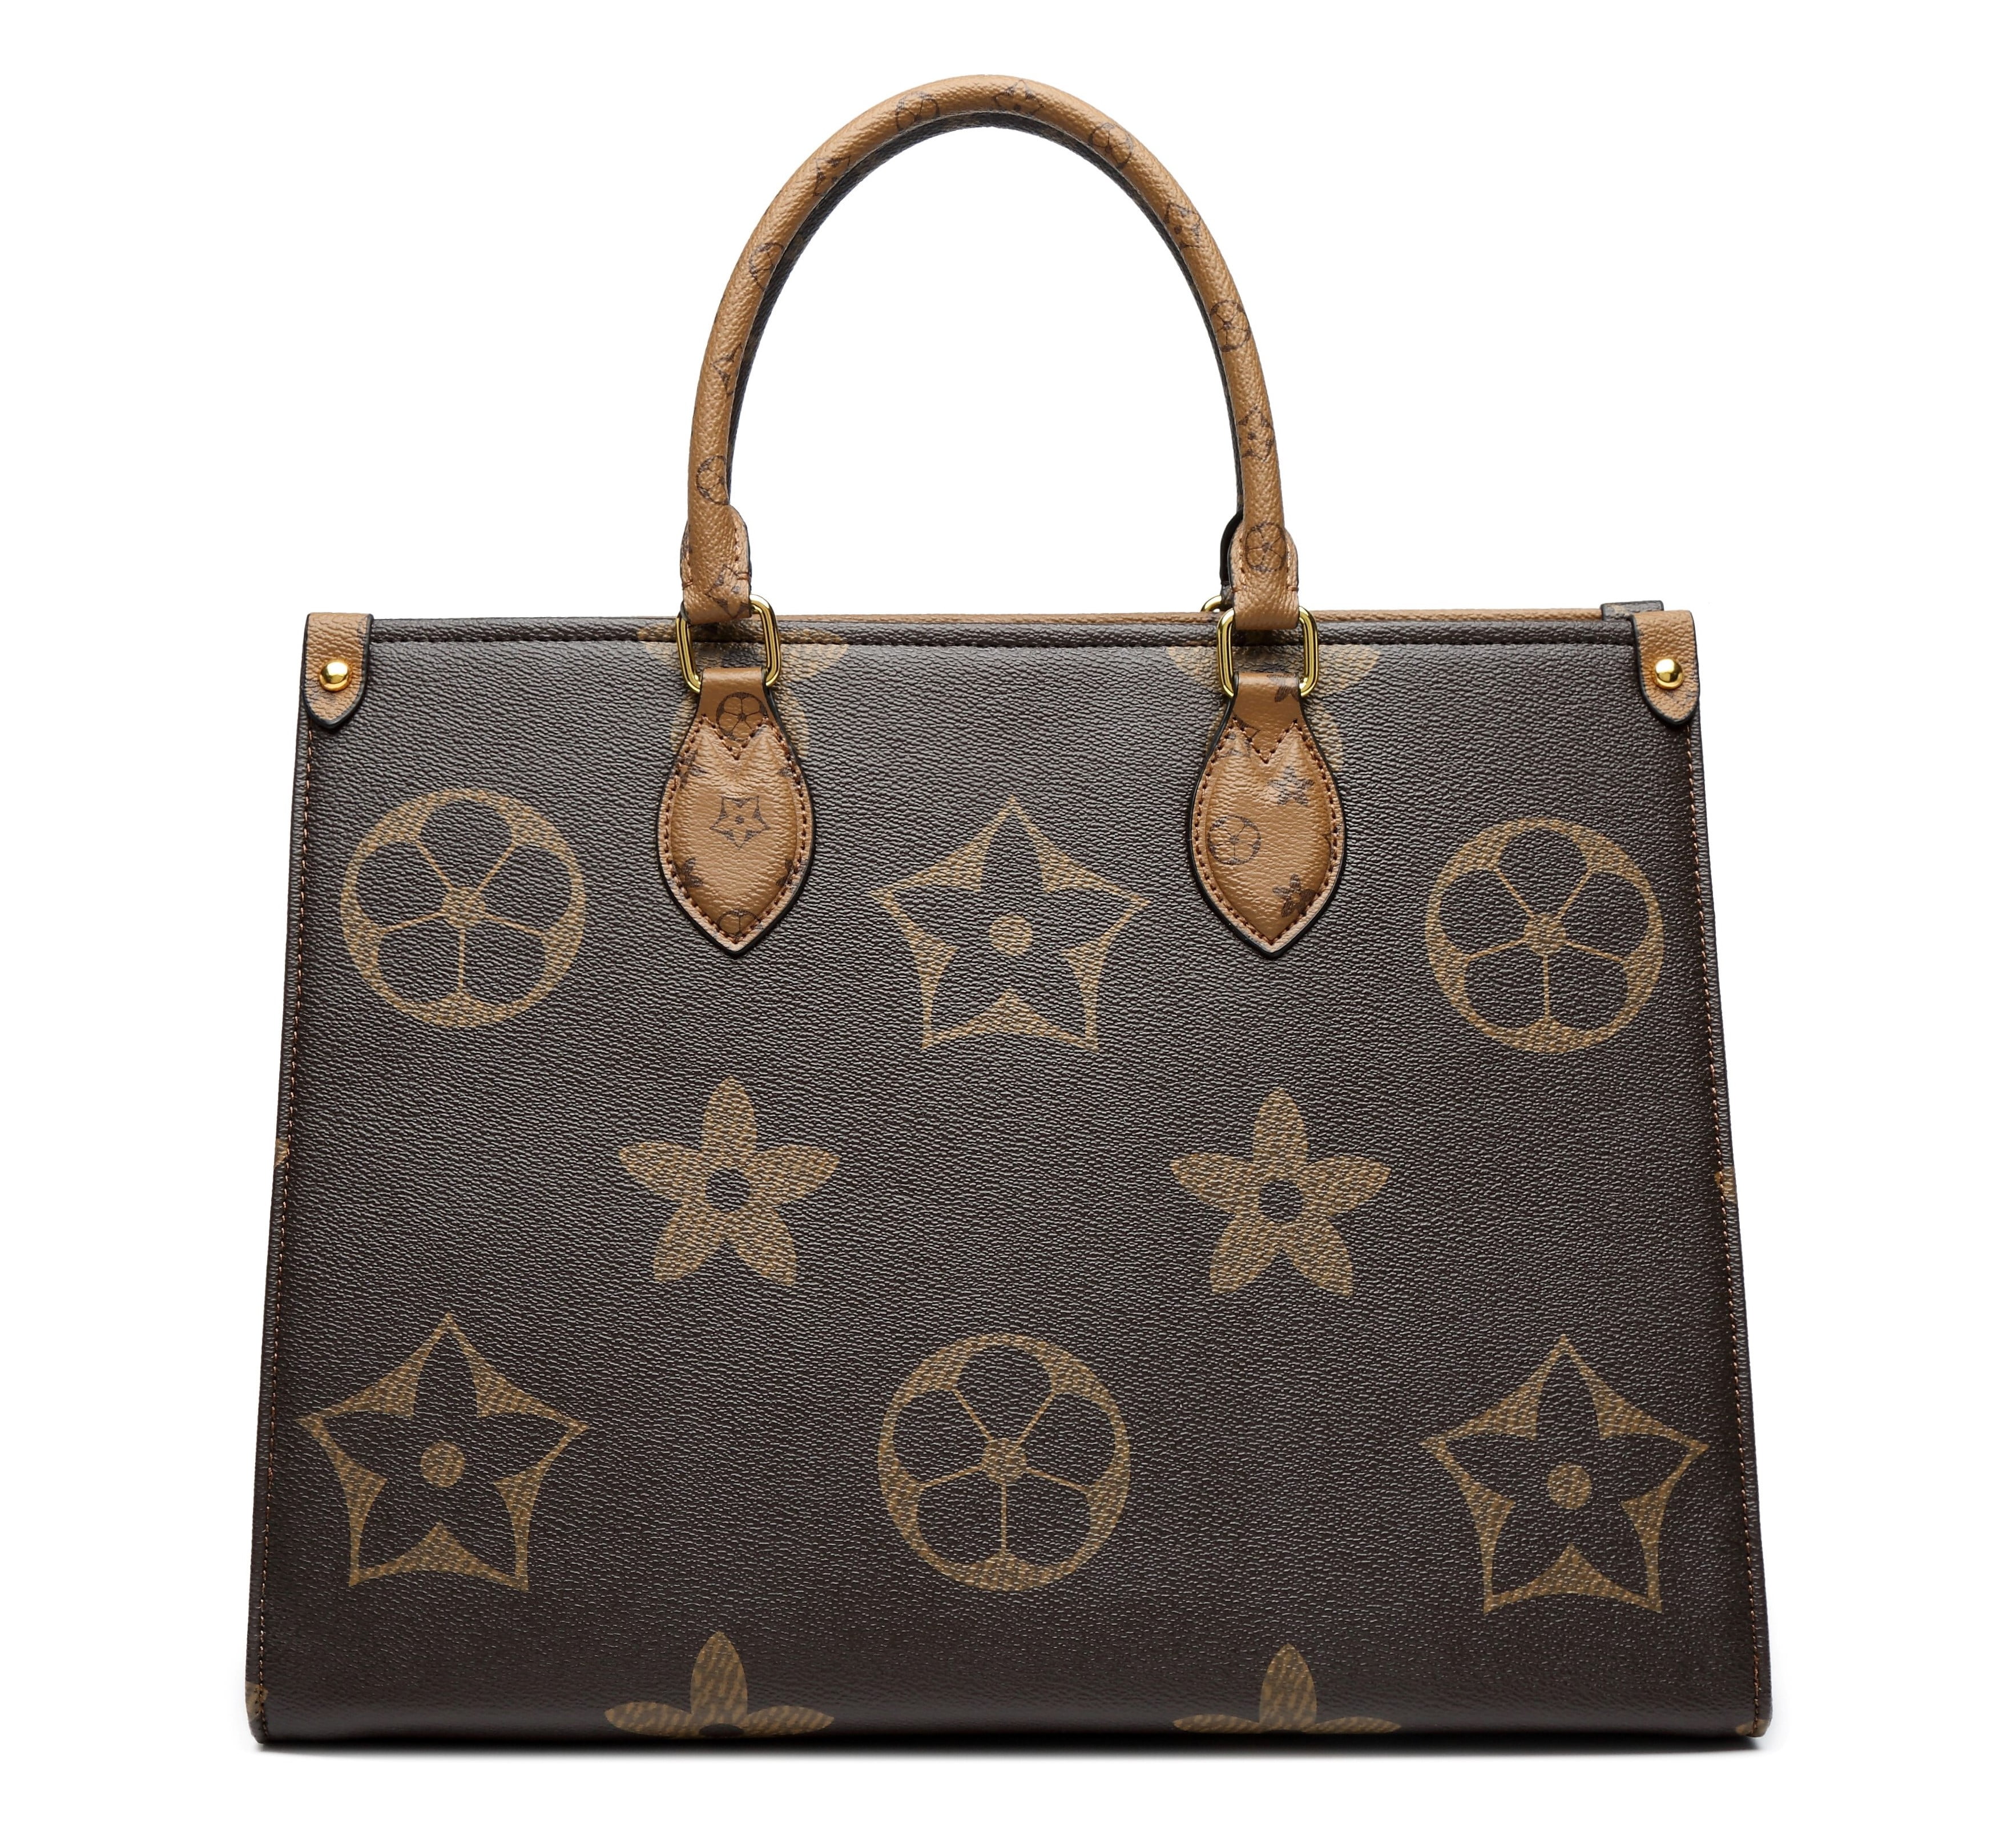 Womens Purses & Handbags Shoulder Bag Ladies Designer Satchel Messenger Tote 